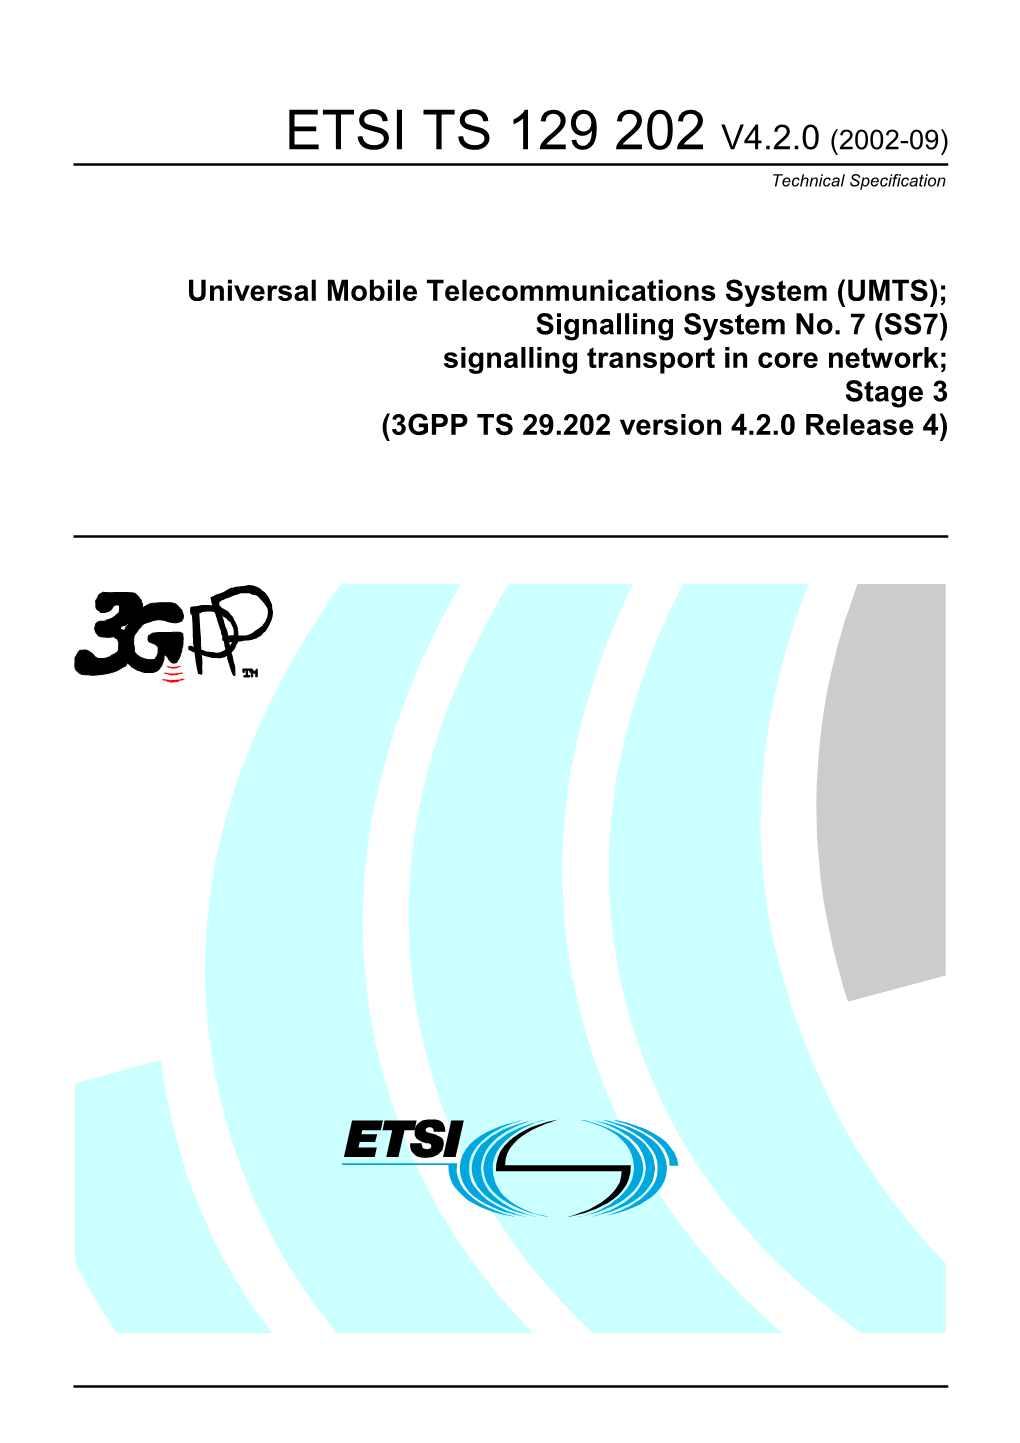 ETSI TS 129 202 V4.2.0 (2002-09) Technical Specification